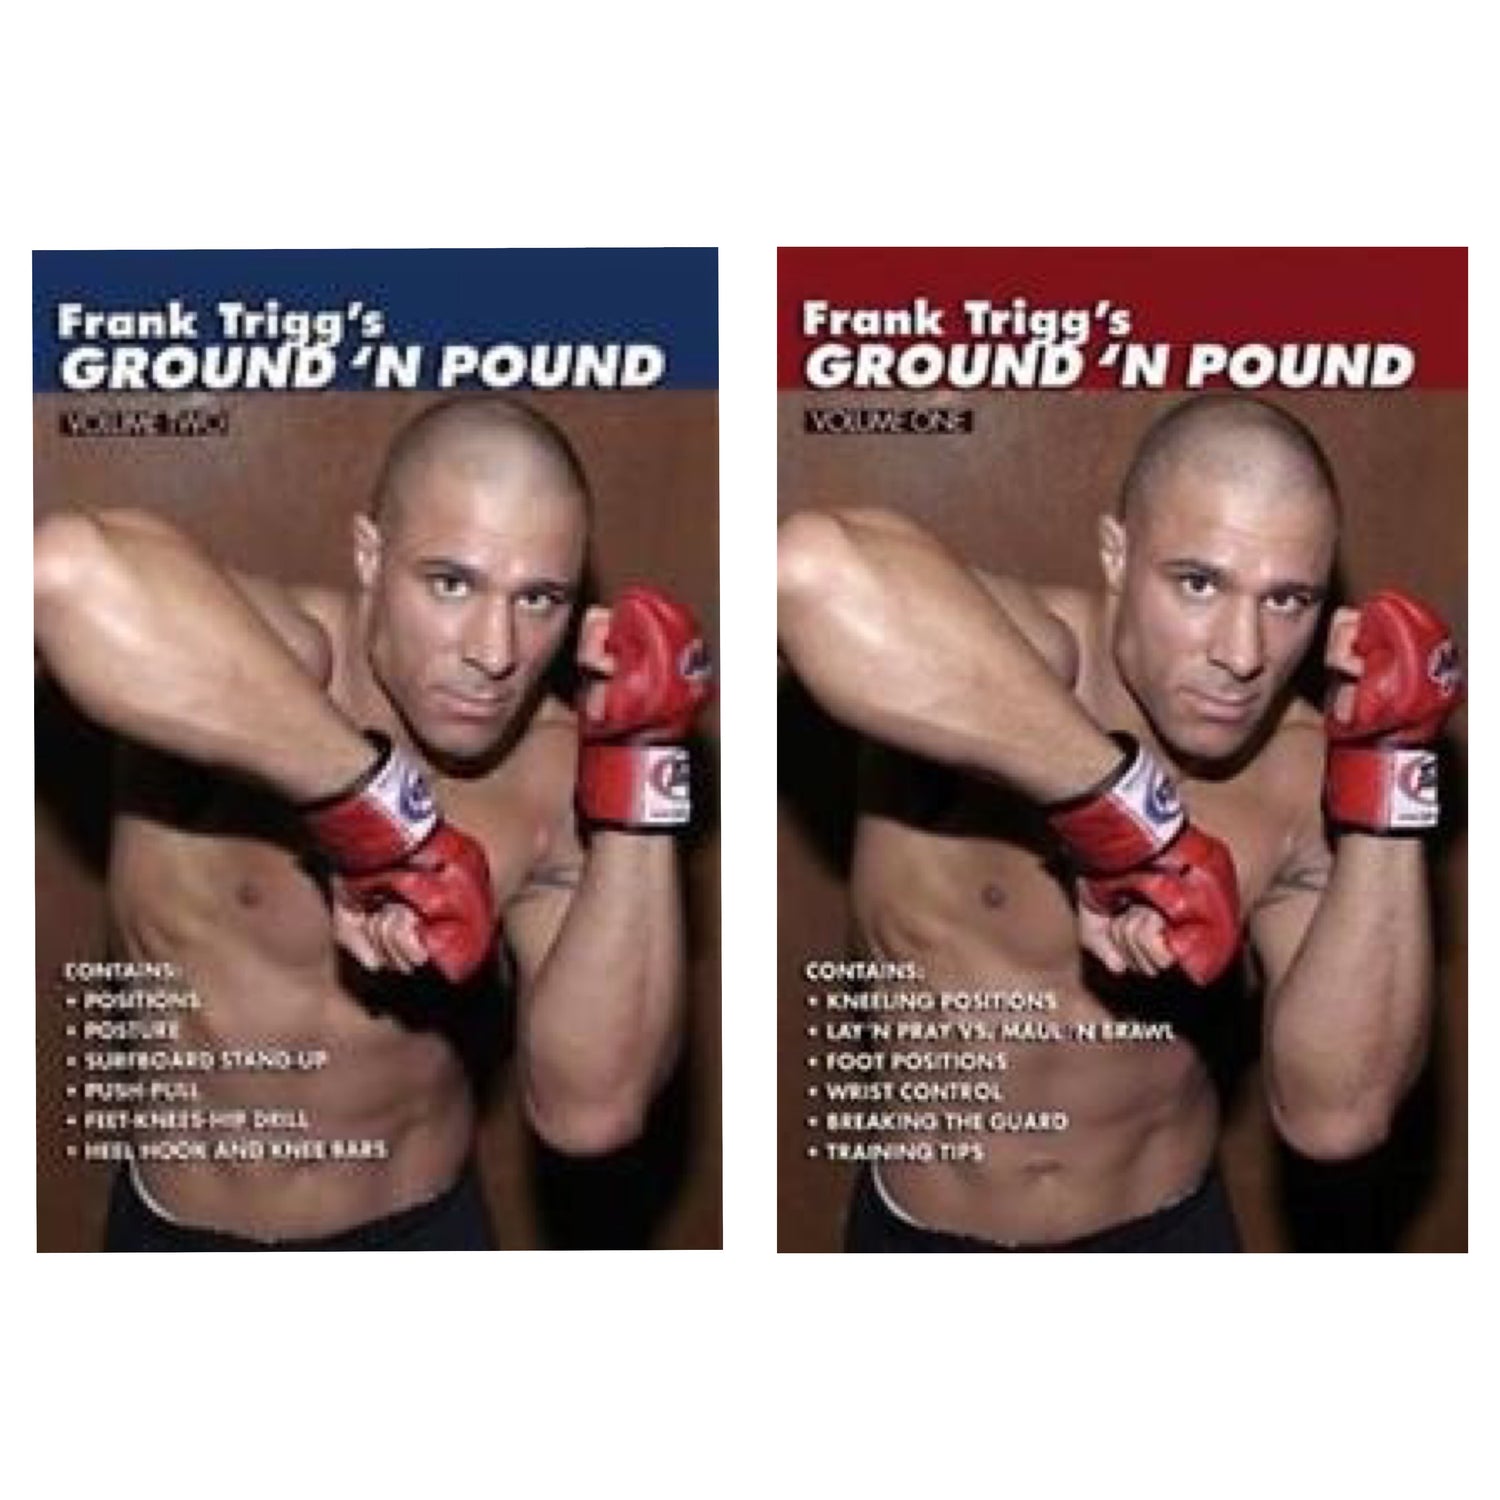 Ground N Pound 2 DVD Set with Frank Trigg